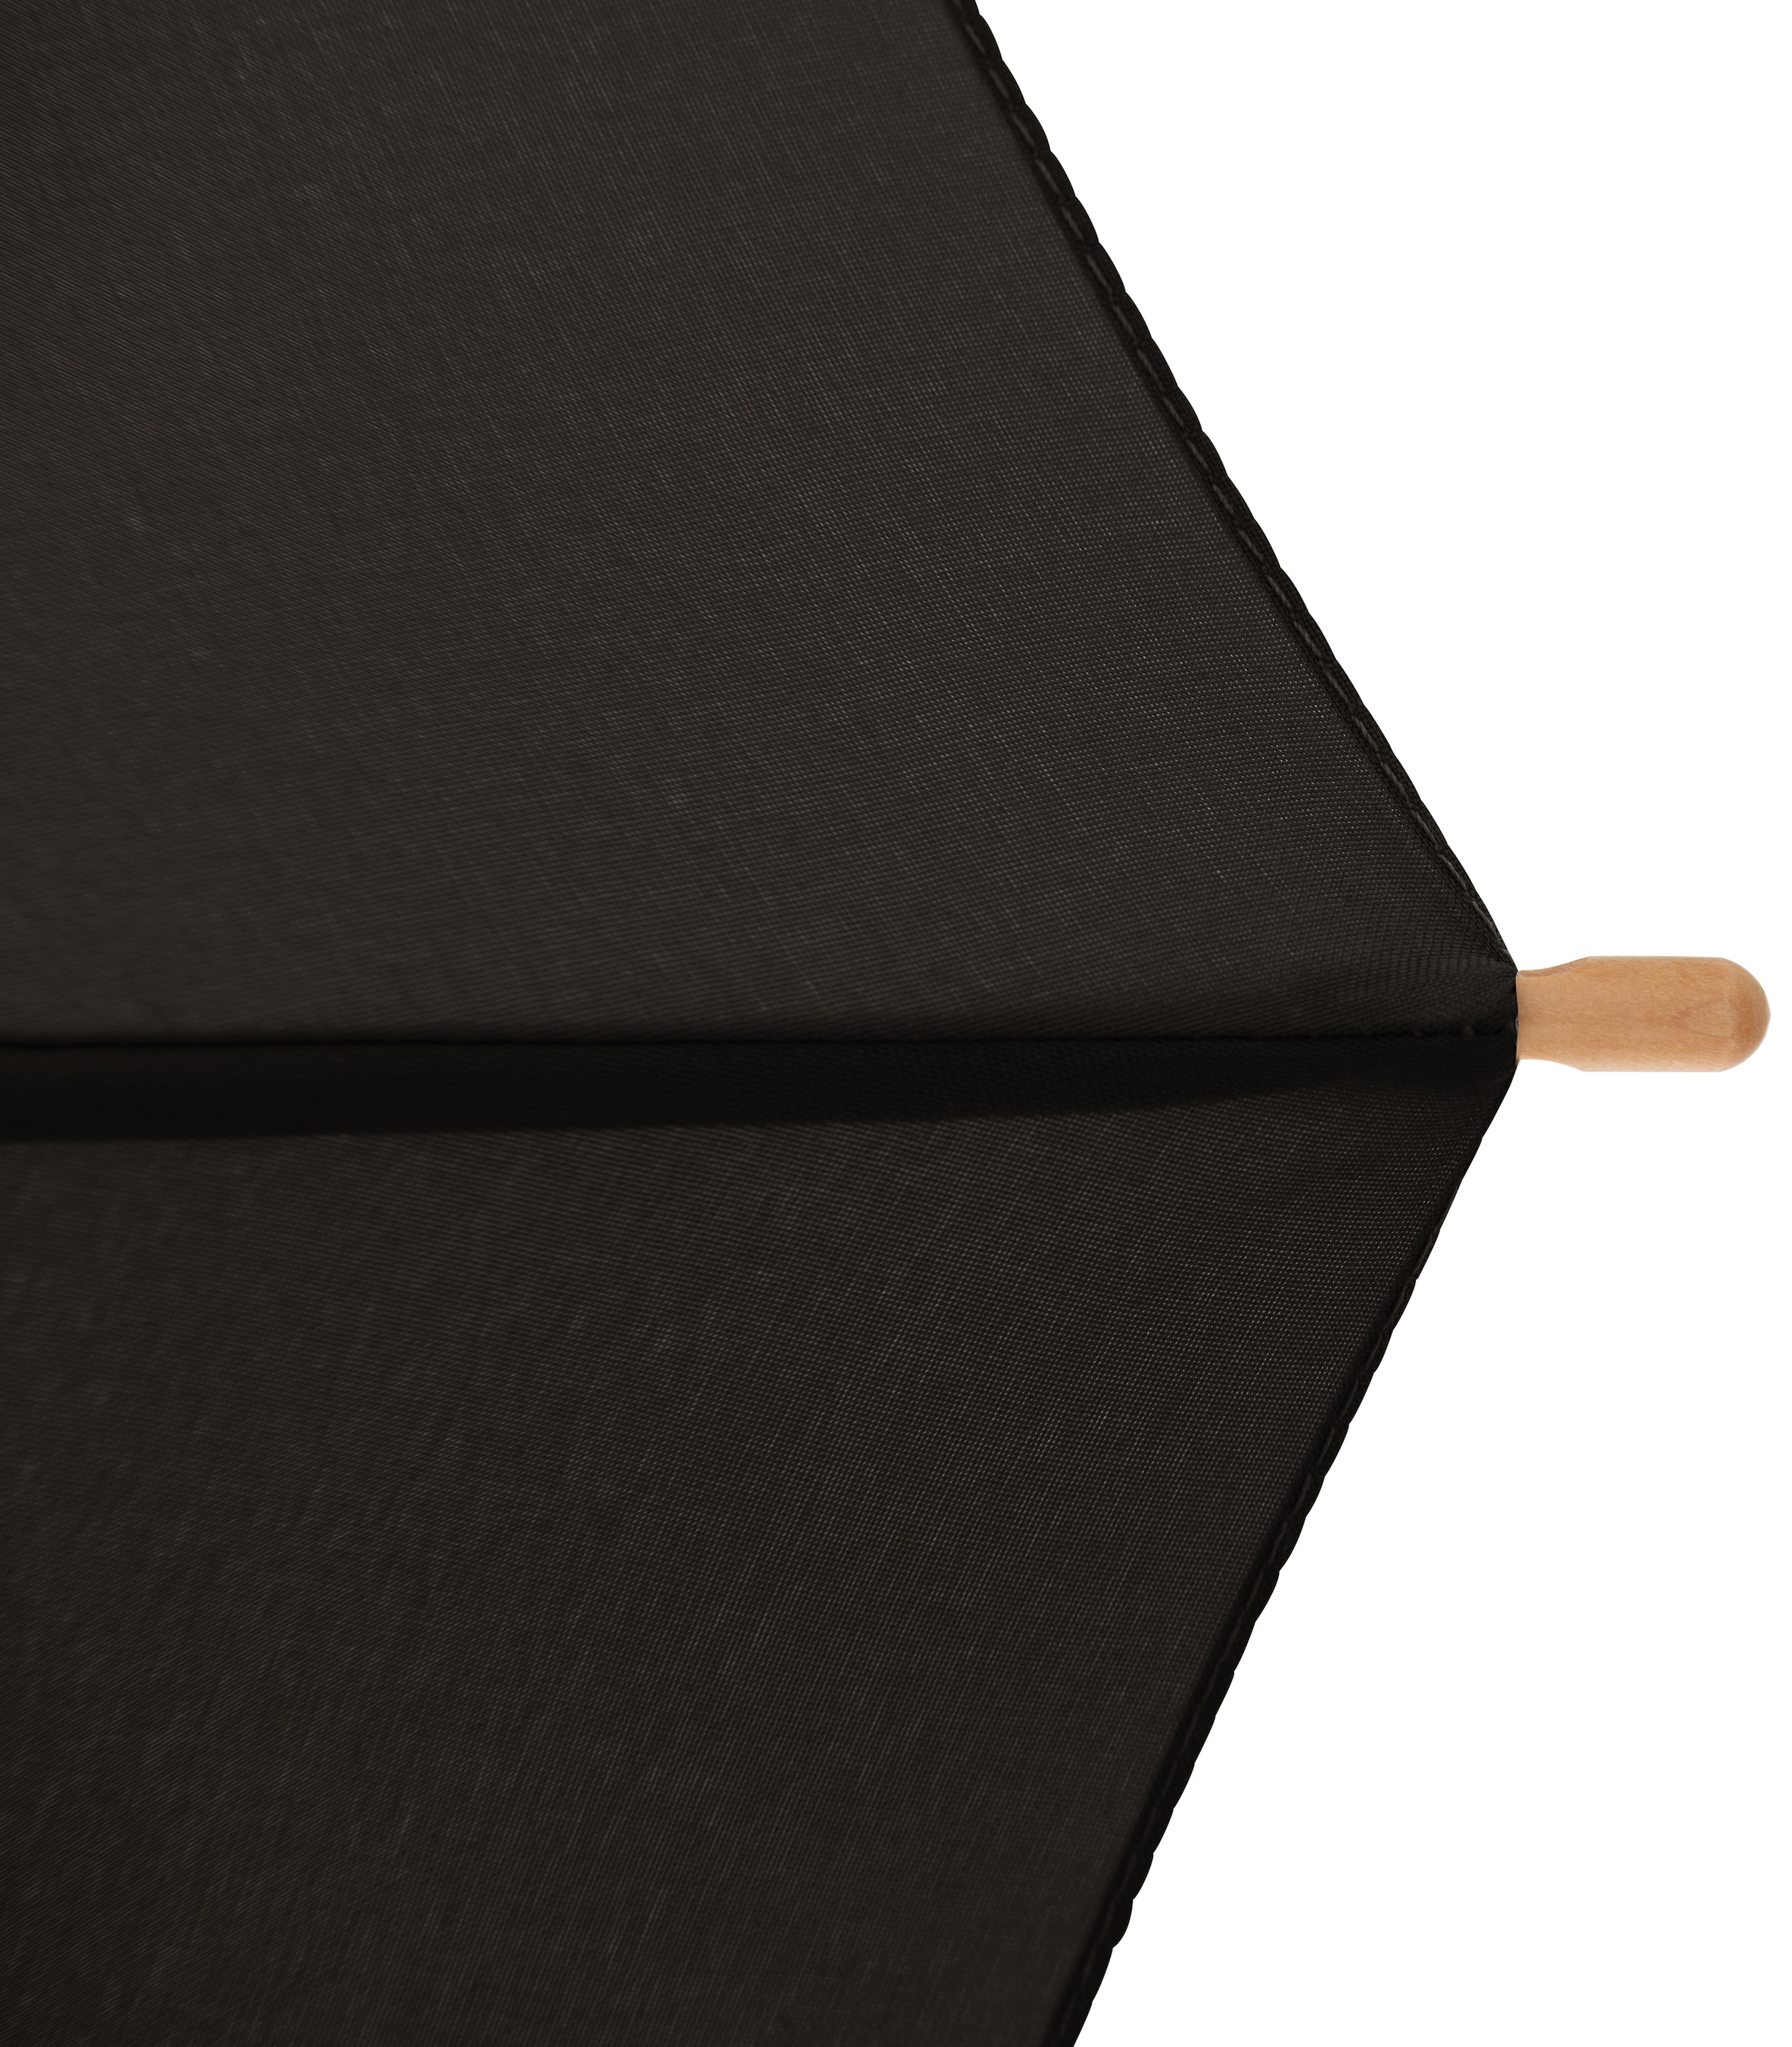 Long, Material Schirmgriff black«, aus kaufen Holz aus simple Stockregenschirm »nature BAUR mit | recyceltem doppler®